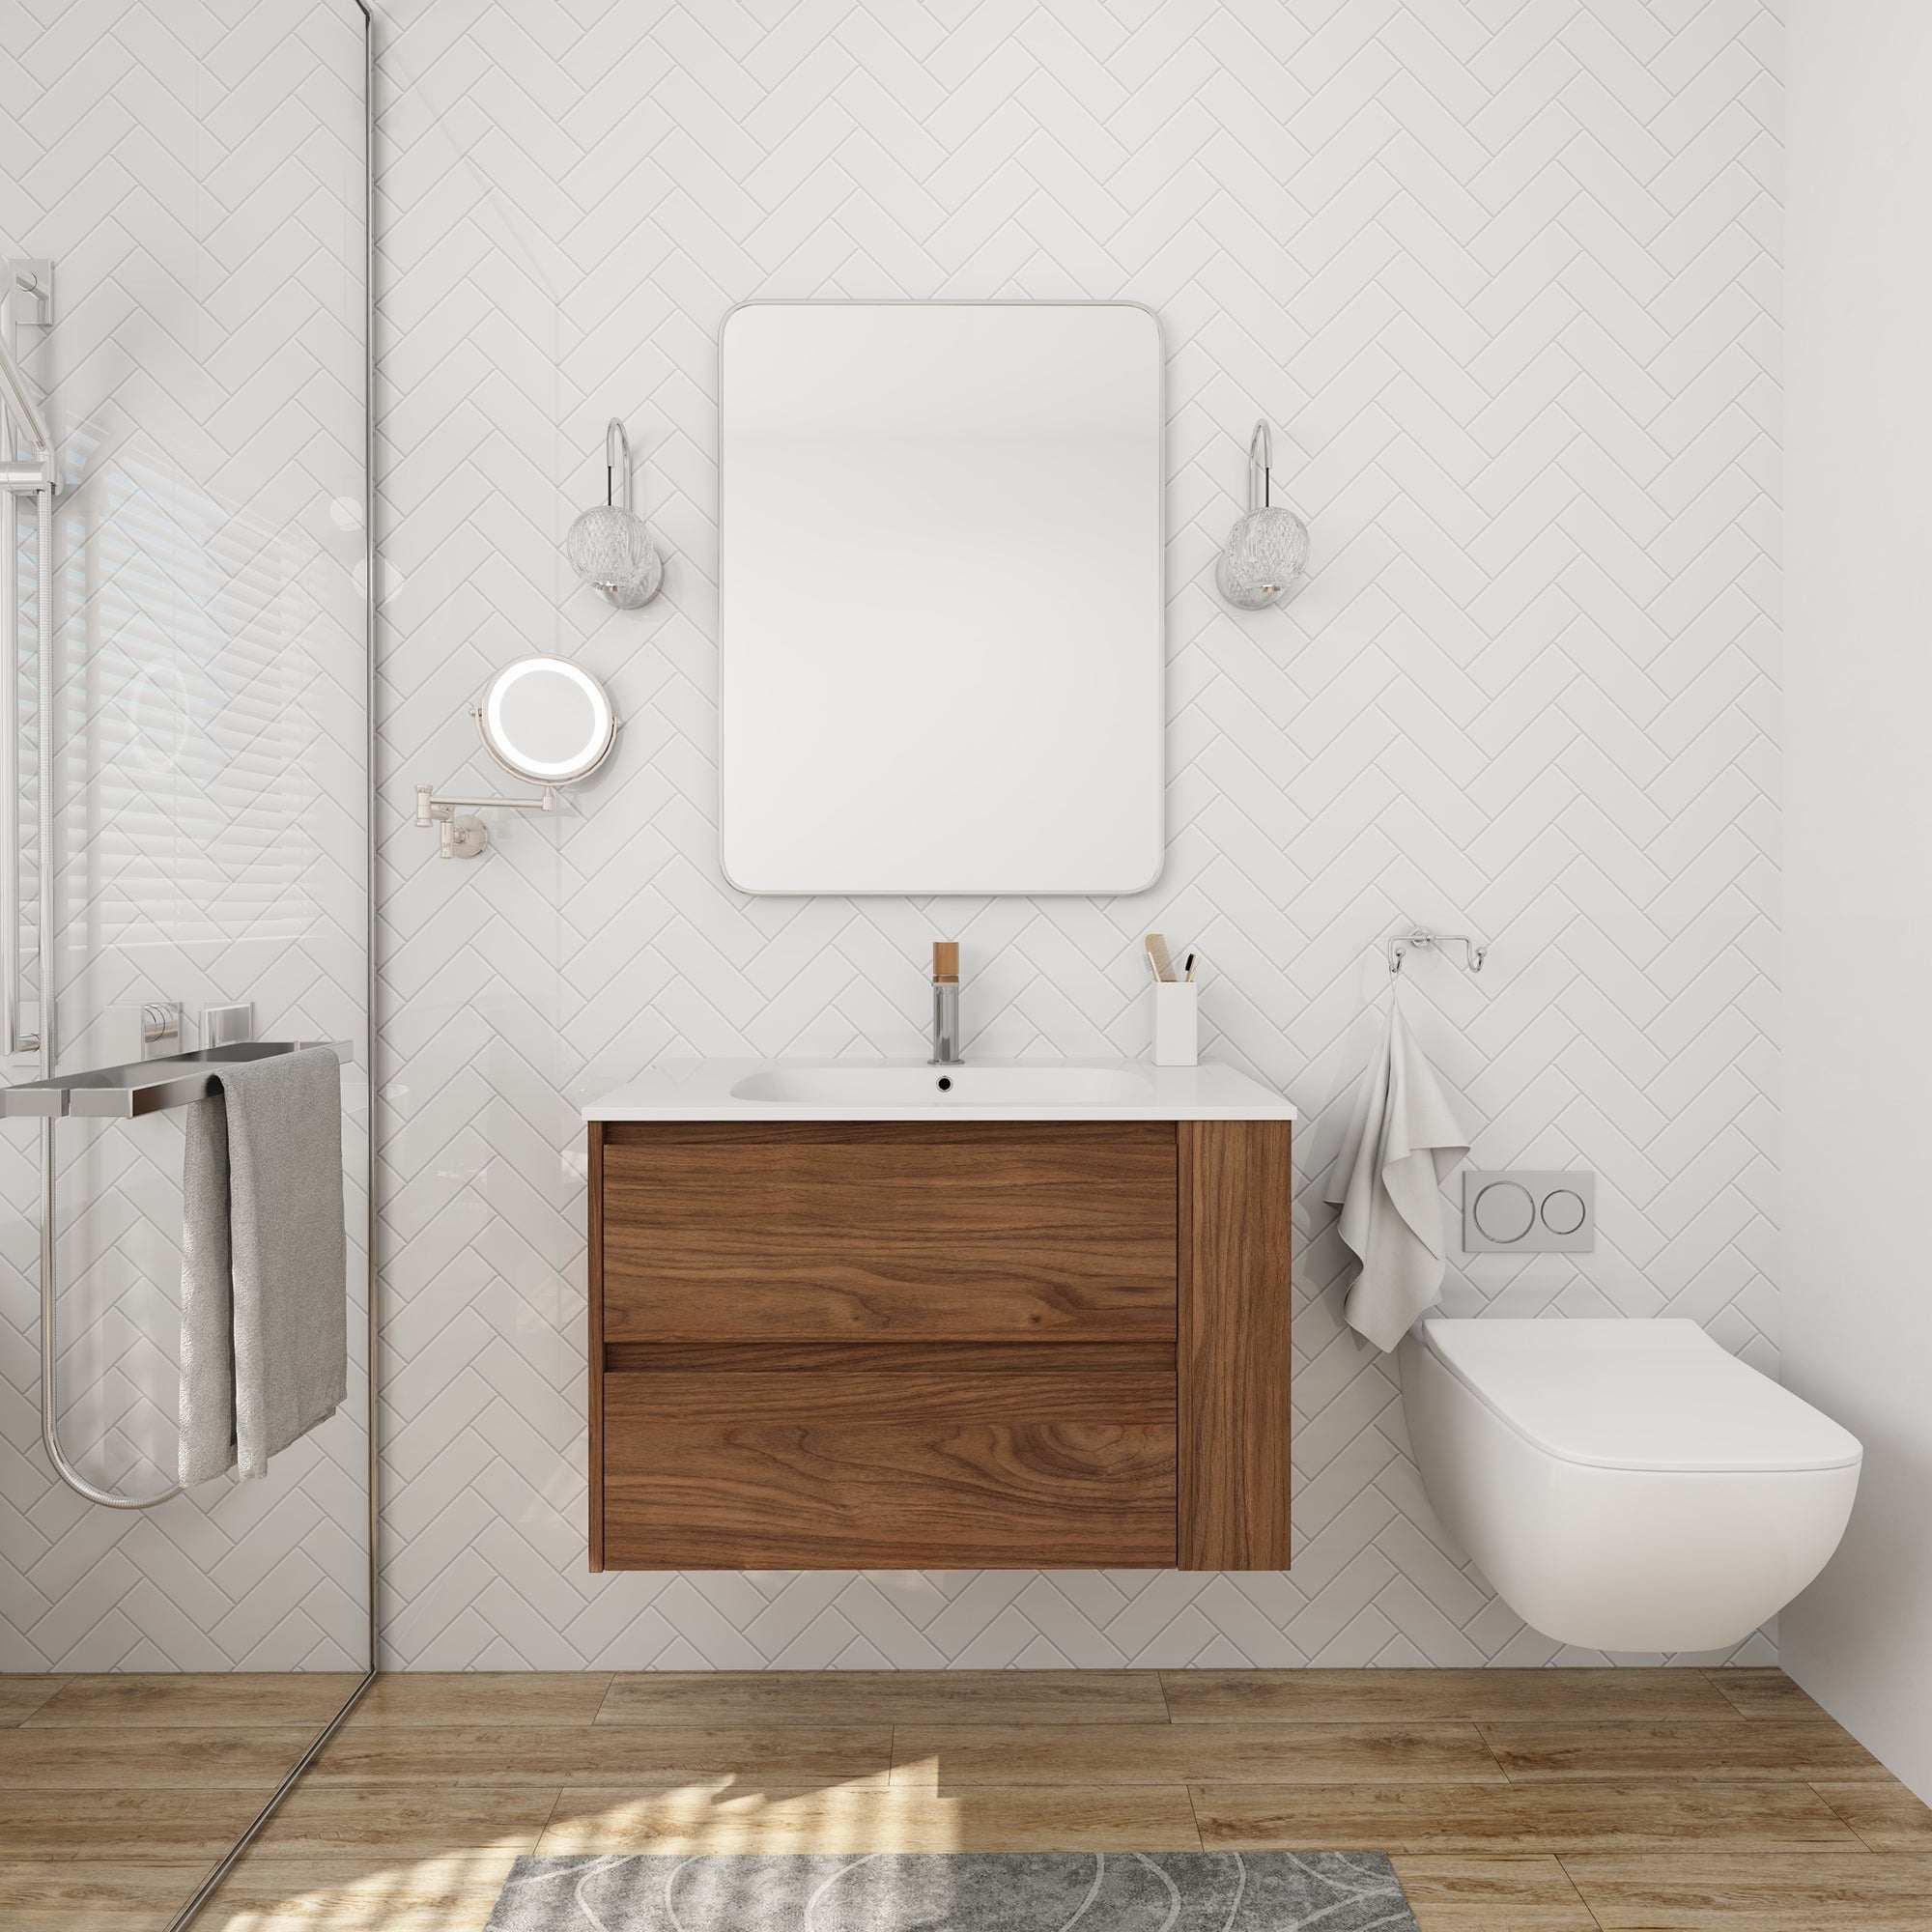 30 in. x 18 in. Bathroom Vanity Organizer Combo Storage Cabinet Set with  Undermount Sink, White